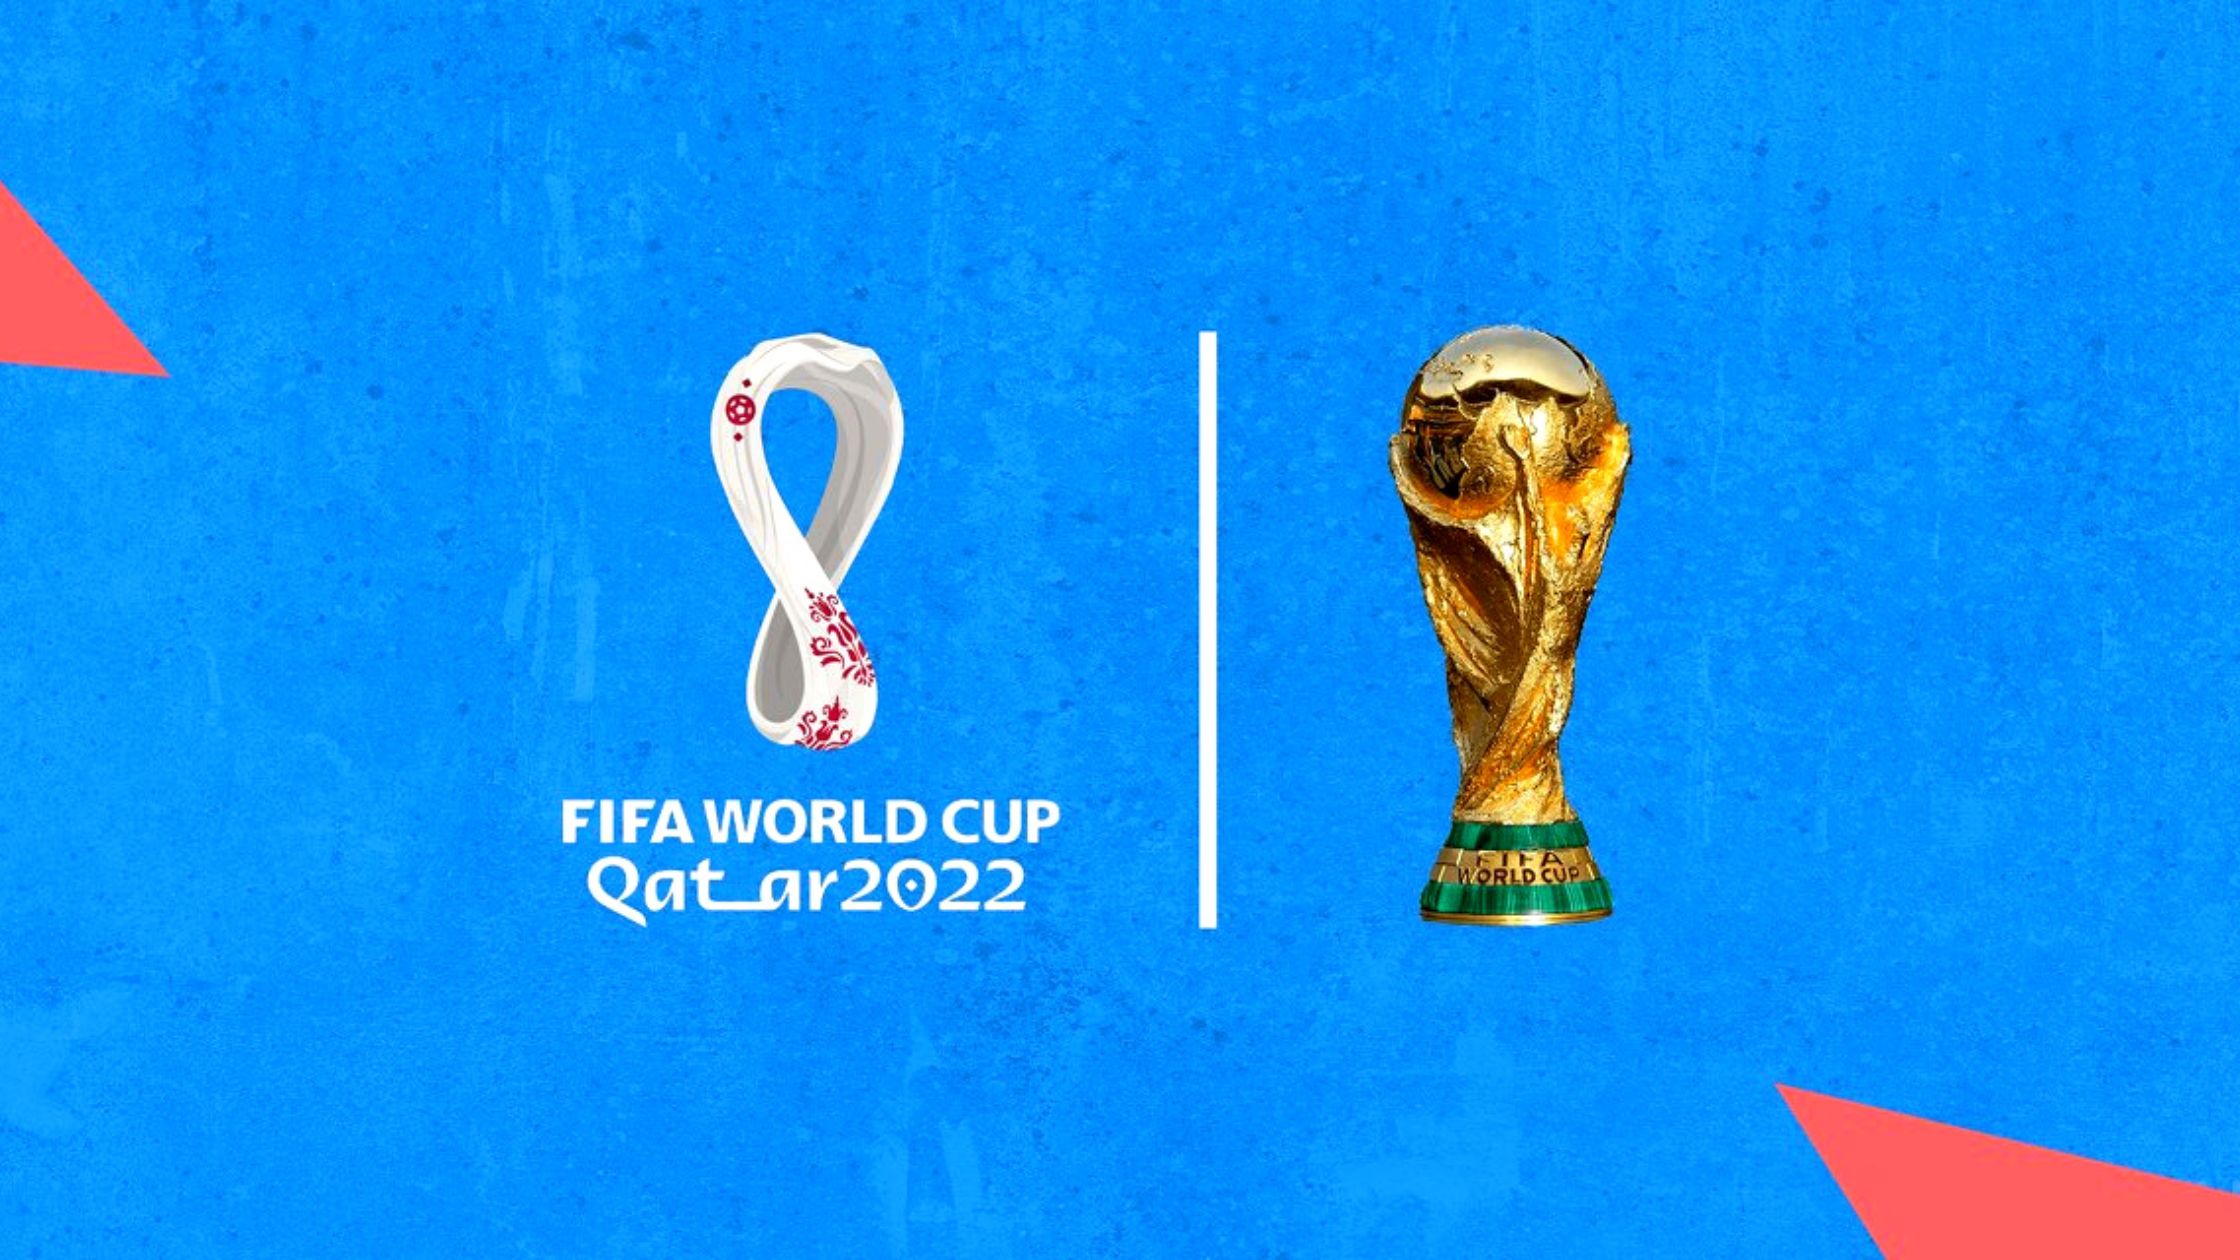 TikTok transmitirá la Copa Mundial de la FIFA de forma gratuita en 4K